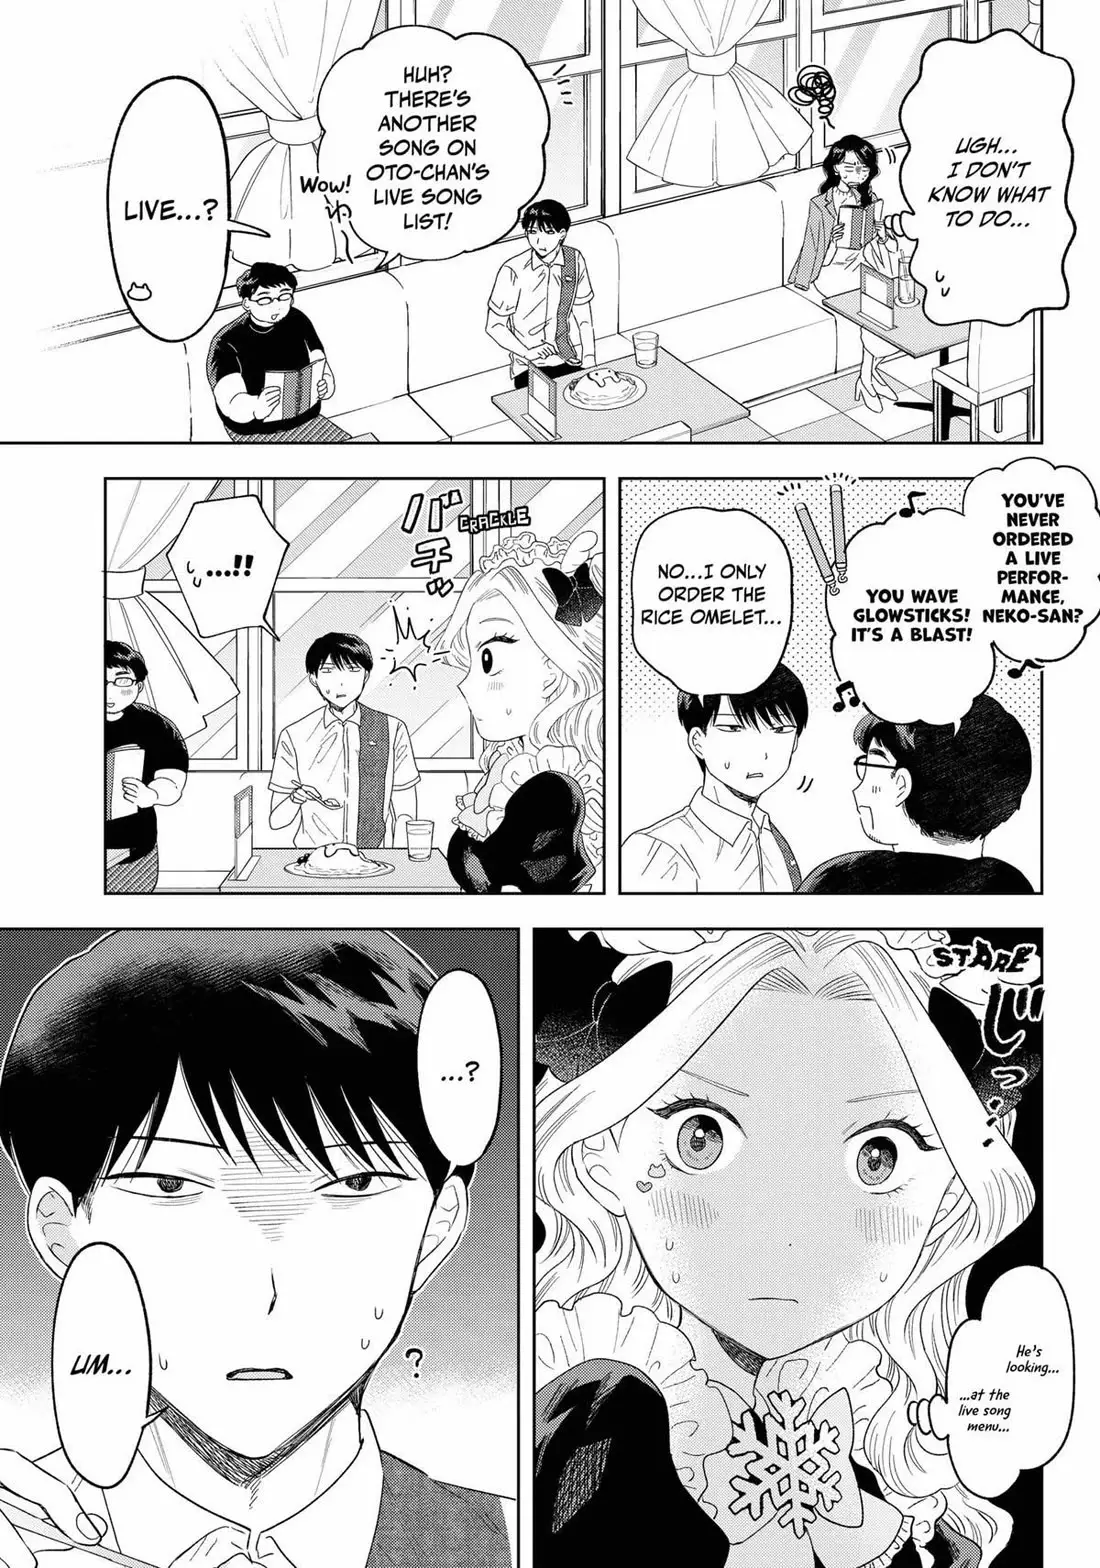 Tsuruko Returns The Favor - 18 page 13-1dc07425